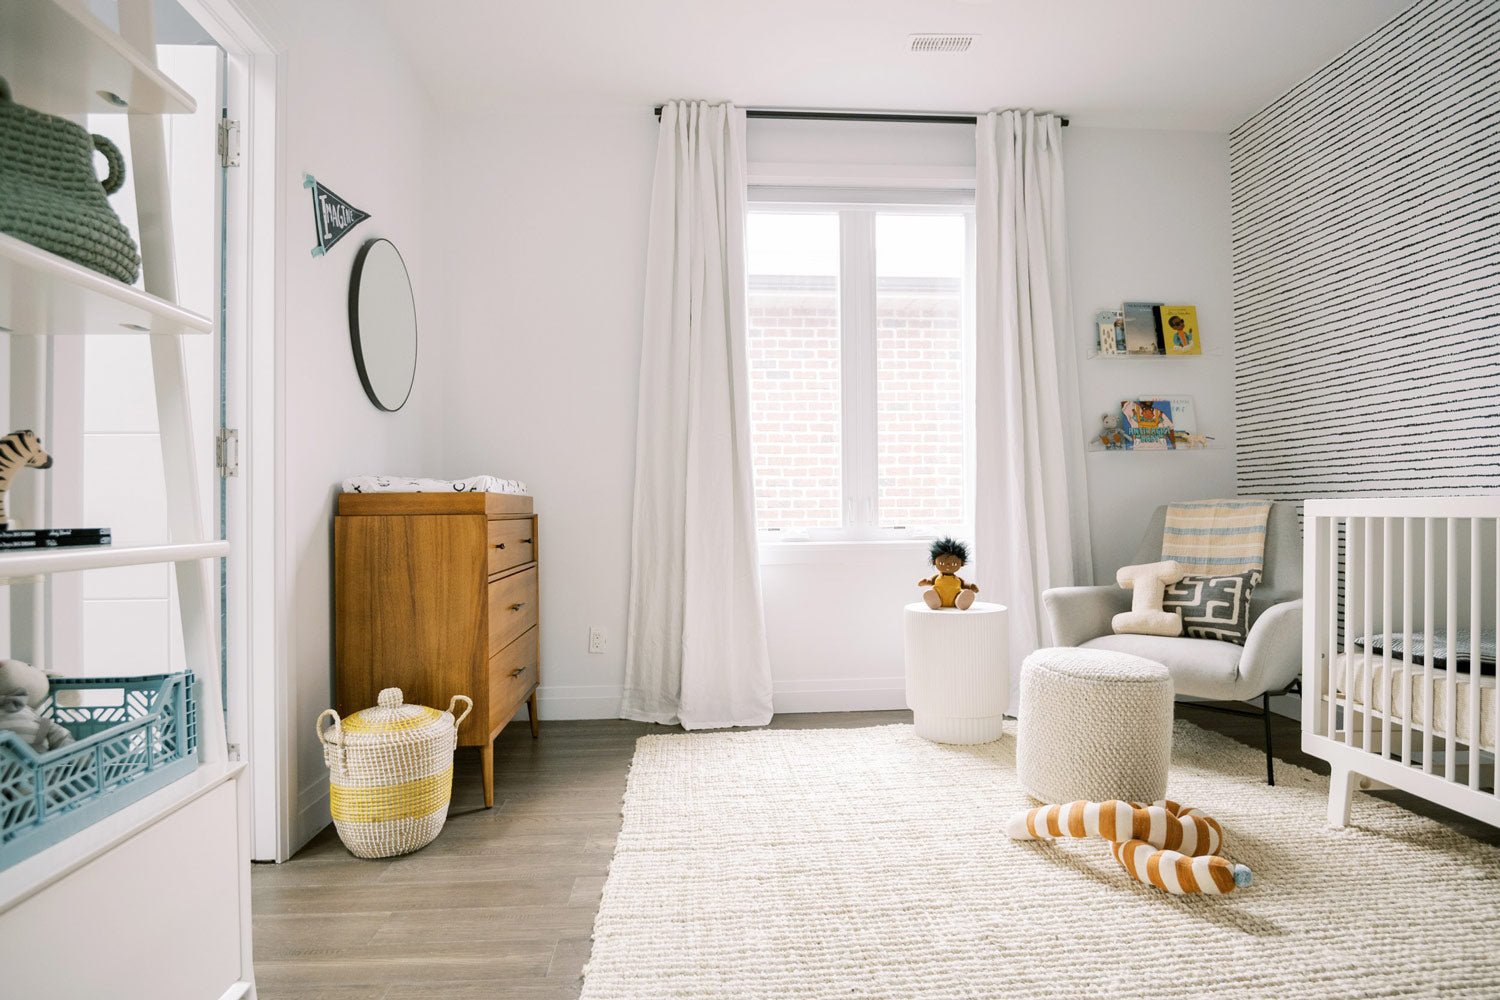 Minimalistic home interior for kids